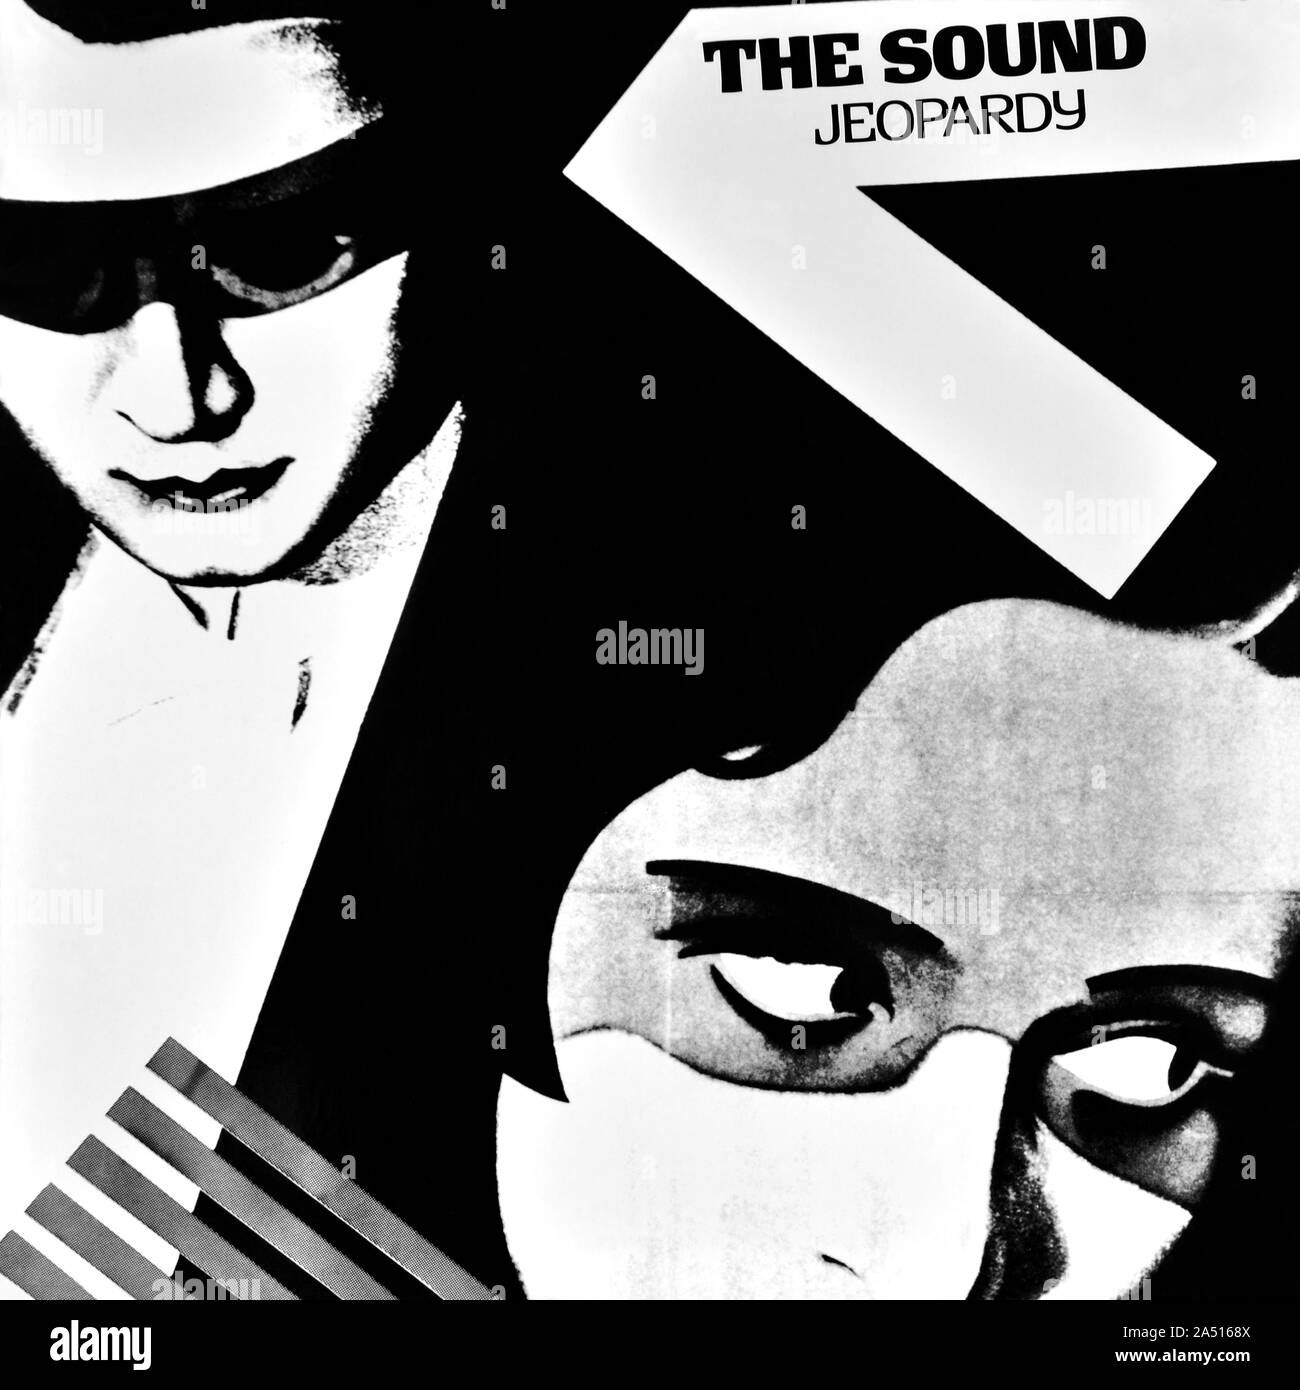 The Sound - original vinyl album cover - Jeopardy - 1980 Stock Photo